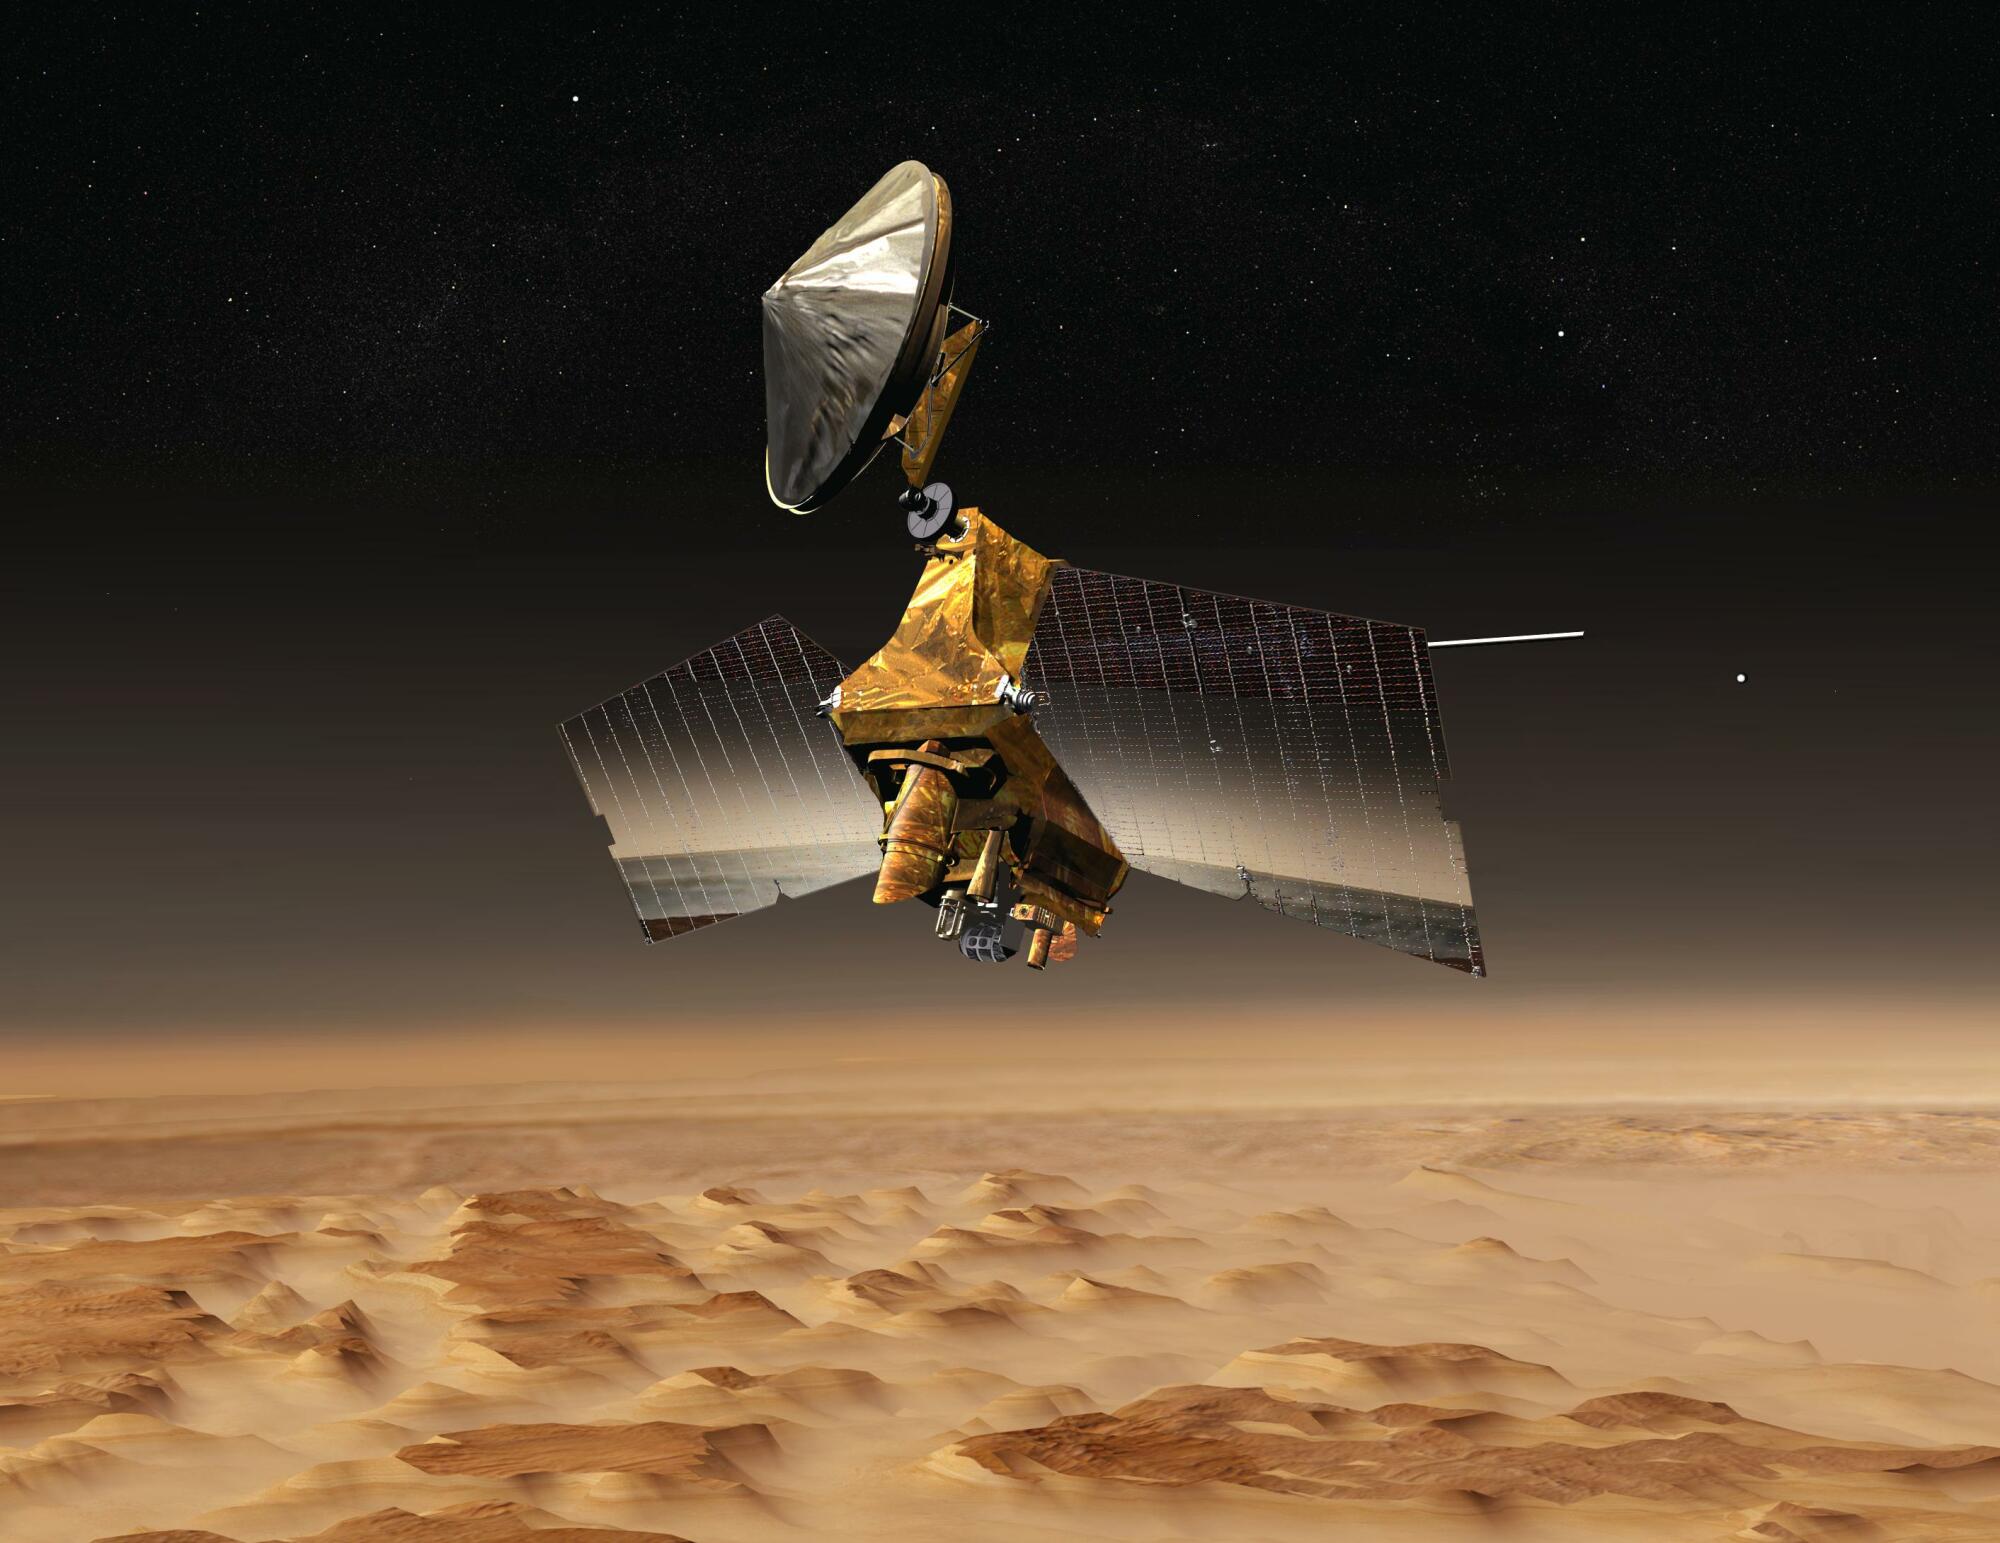 An artist's conception of the Mars Reconnaissance Orbiter flying over the Martian desert.